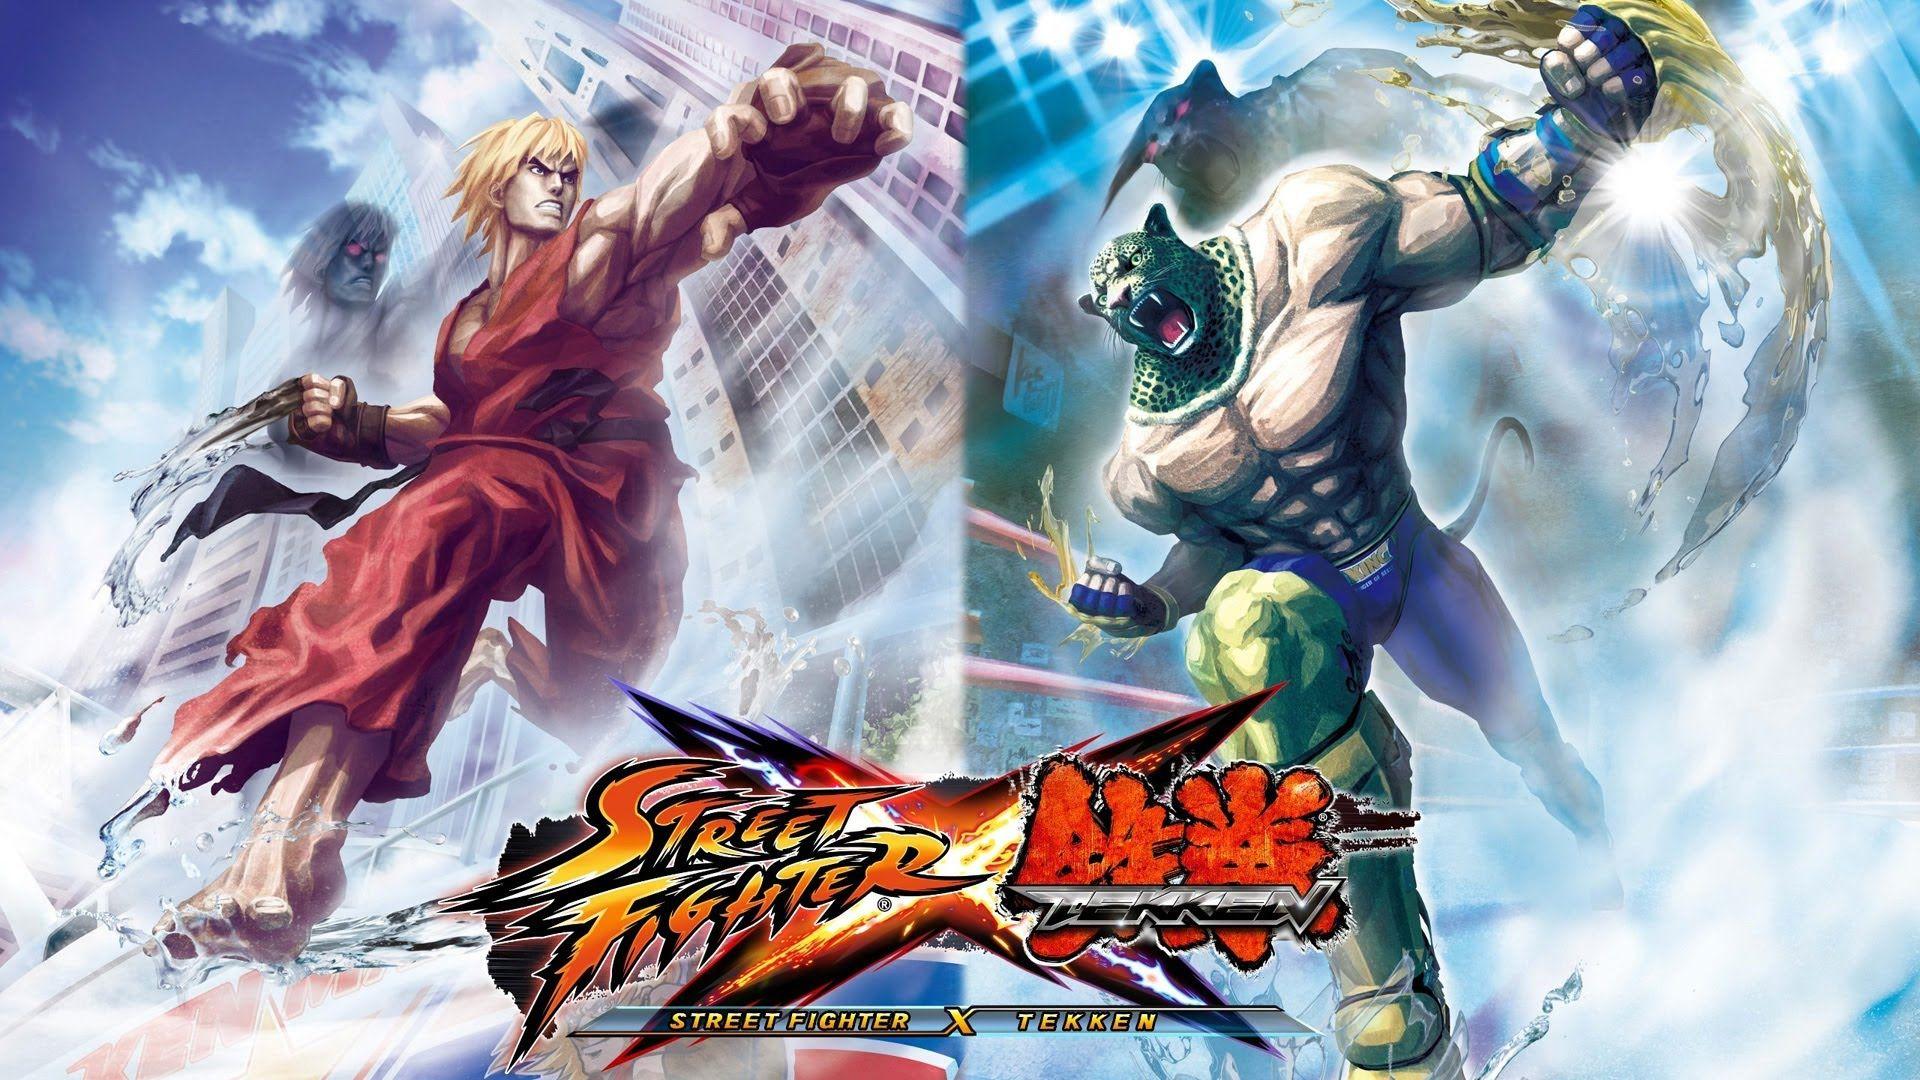 Street Fighter X Tekken HD Wallpaper 9 X 1080